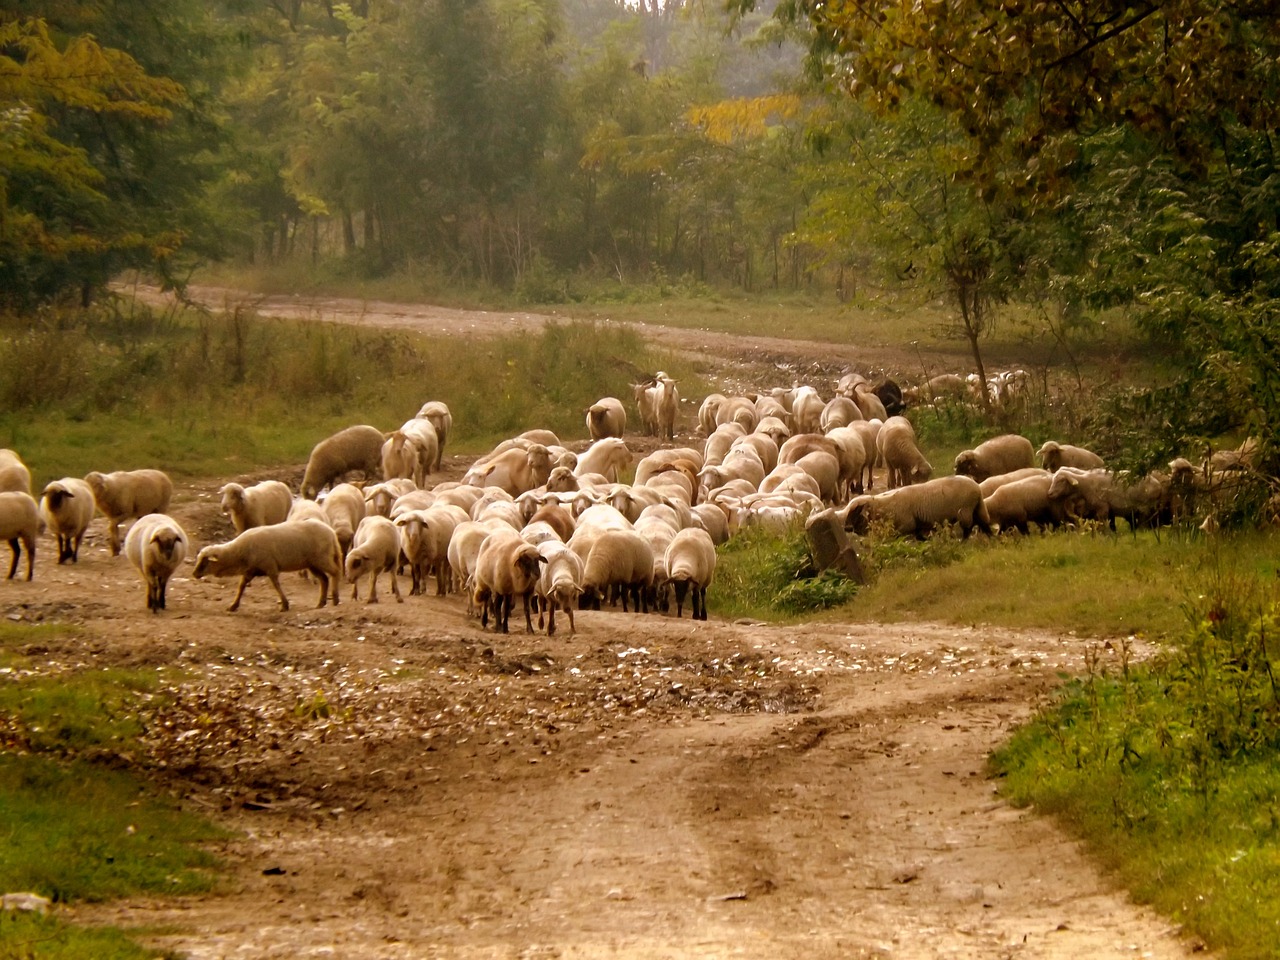 a herd of sheep walking down a dirt road, by György Vastagh, flickr, renaissance, ukrainian, piled around, stream, foam